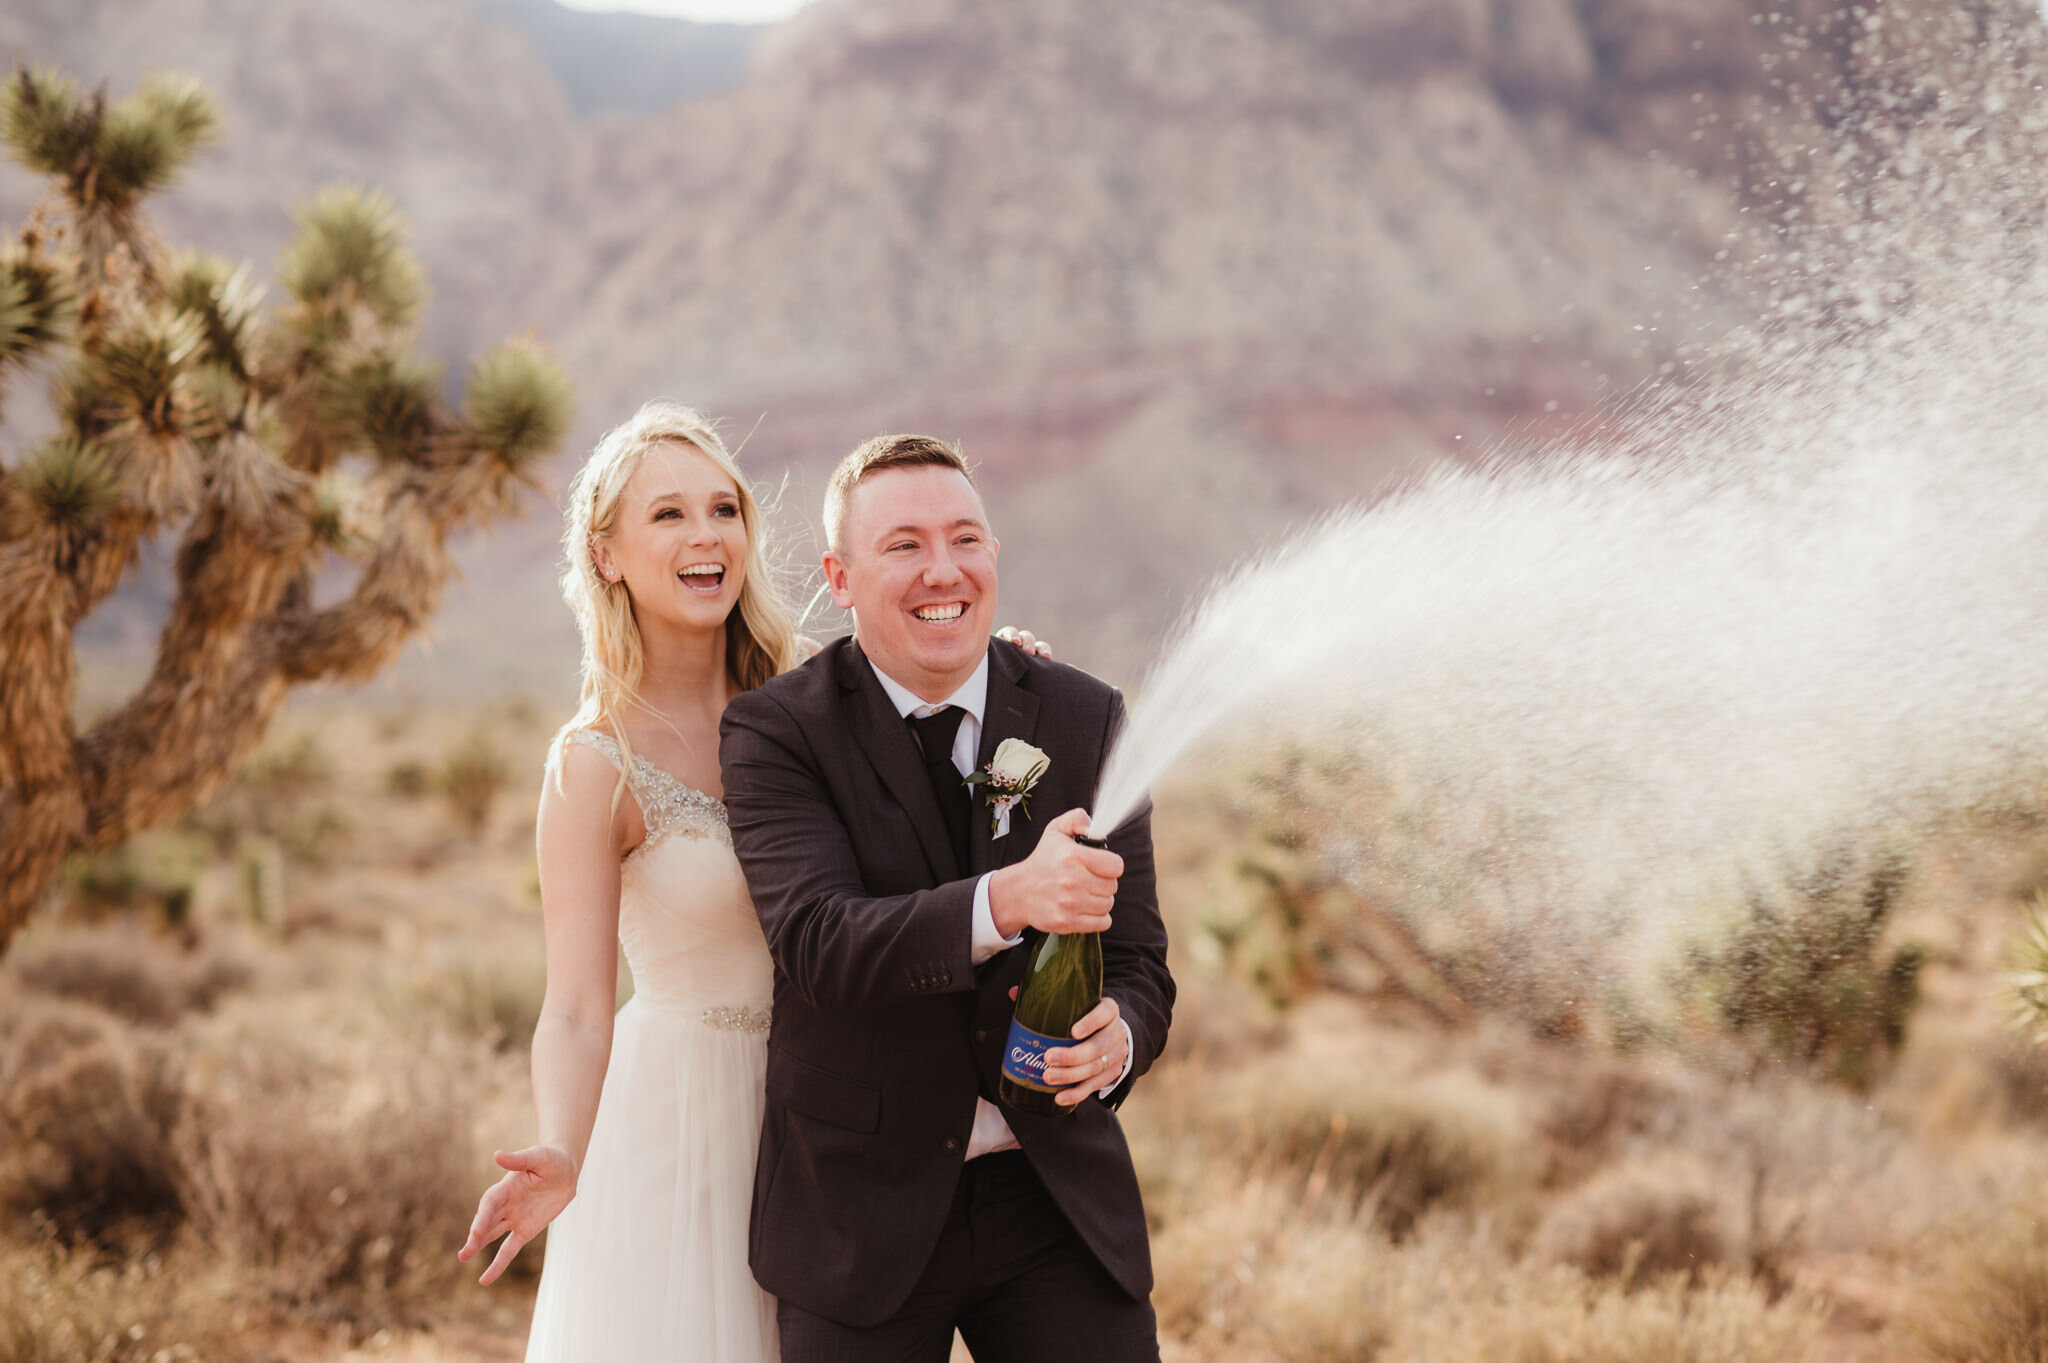 Spring Mountain Ranch Wedding Photos - Amber Garrett Photography - 026.jpg